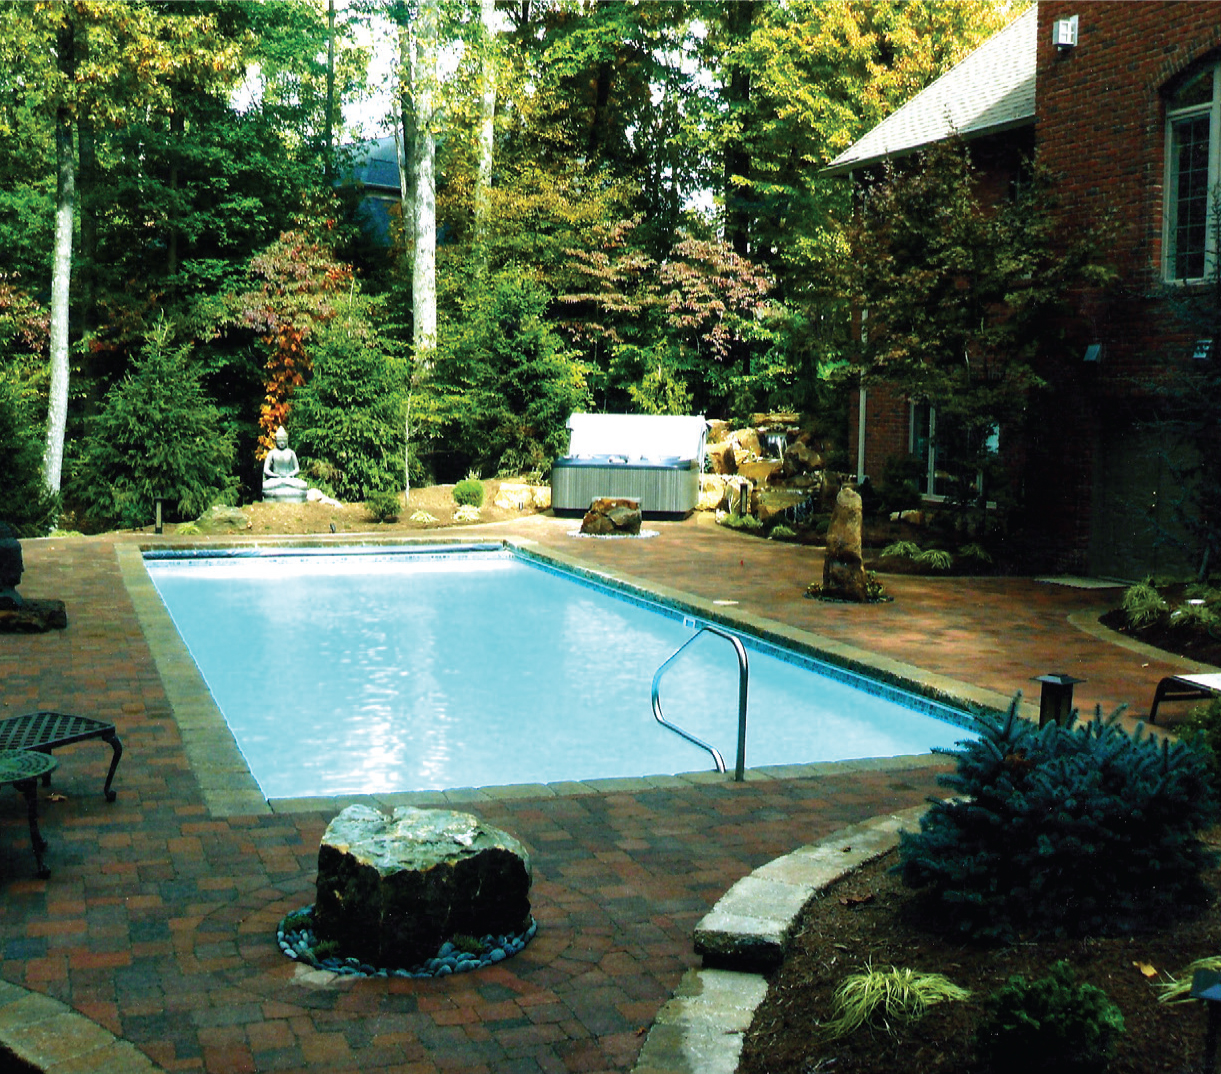 Parker Pools - Beautiful Backyard Pool